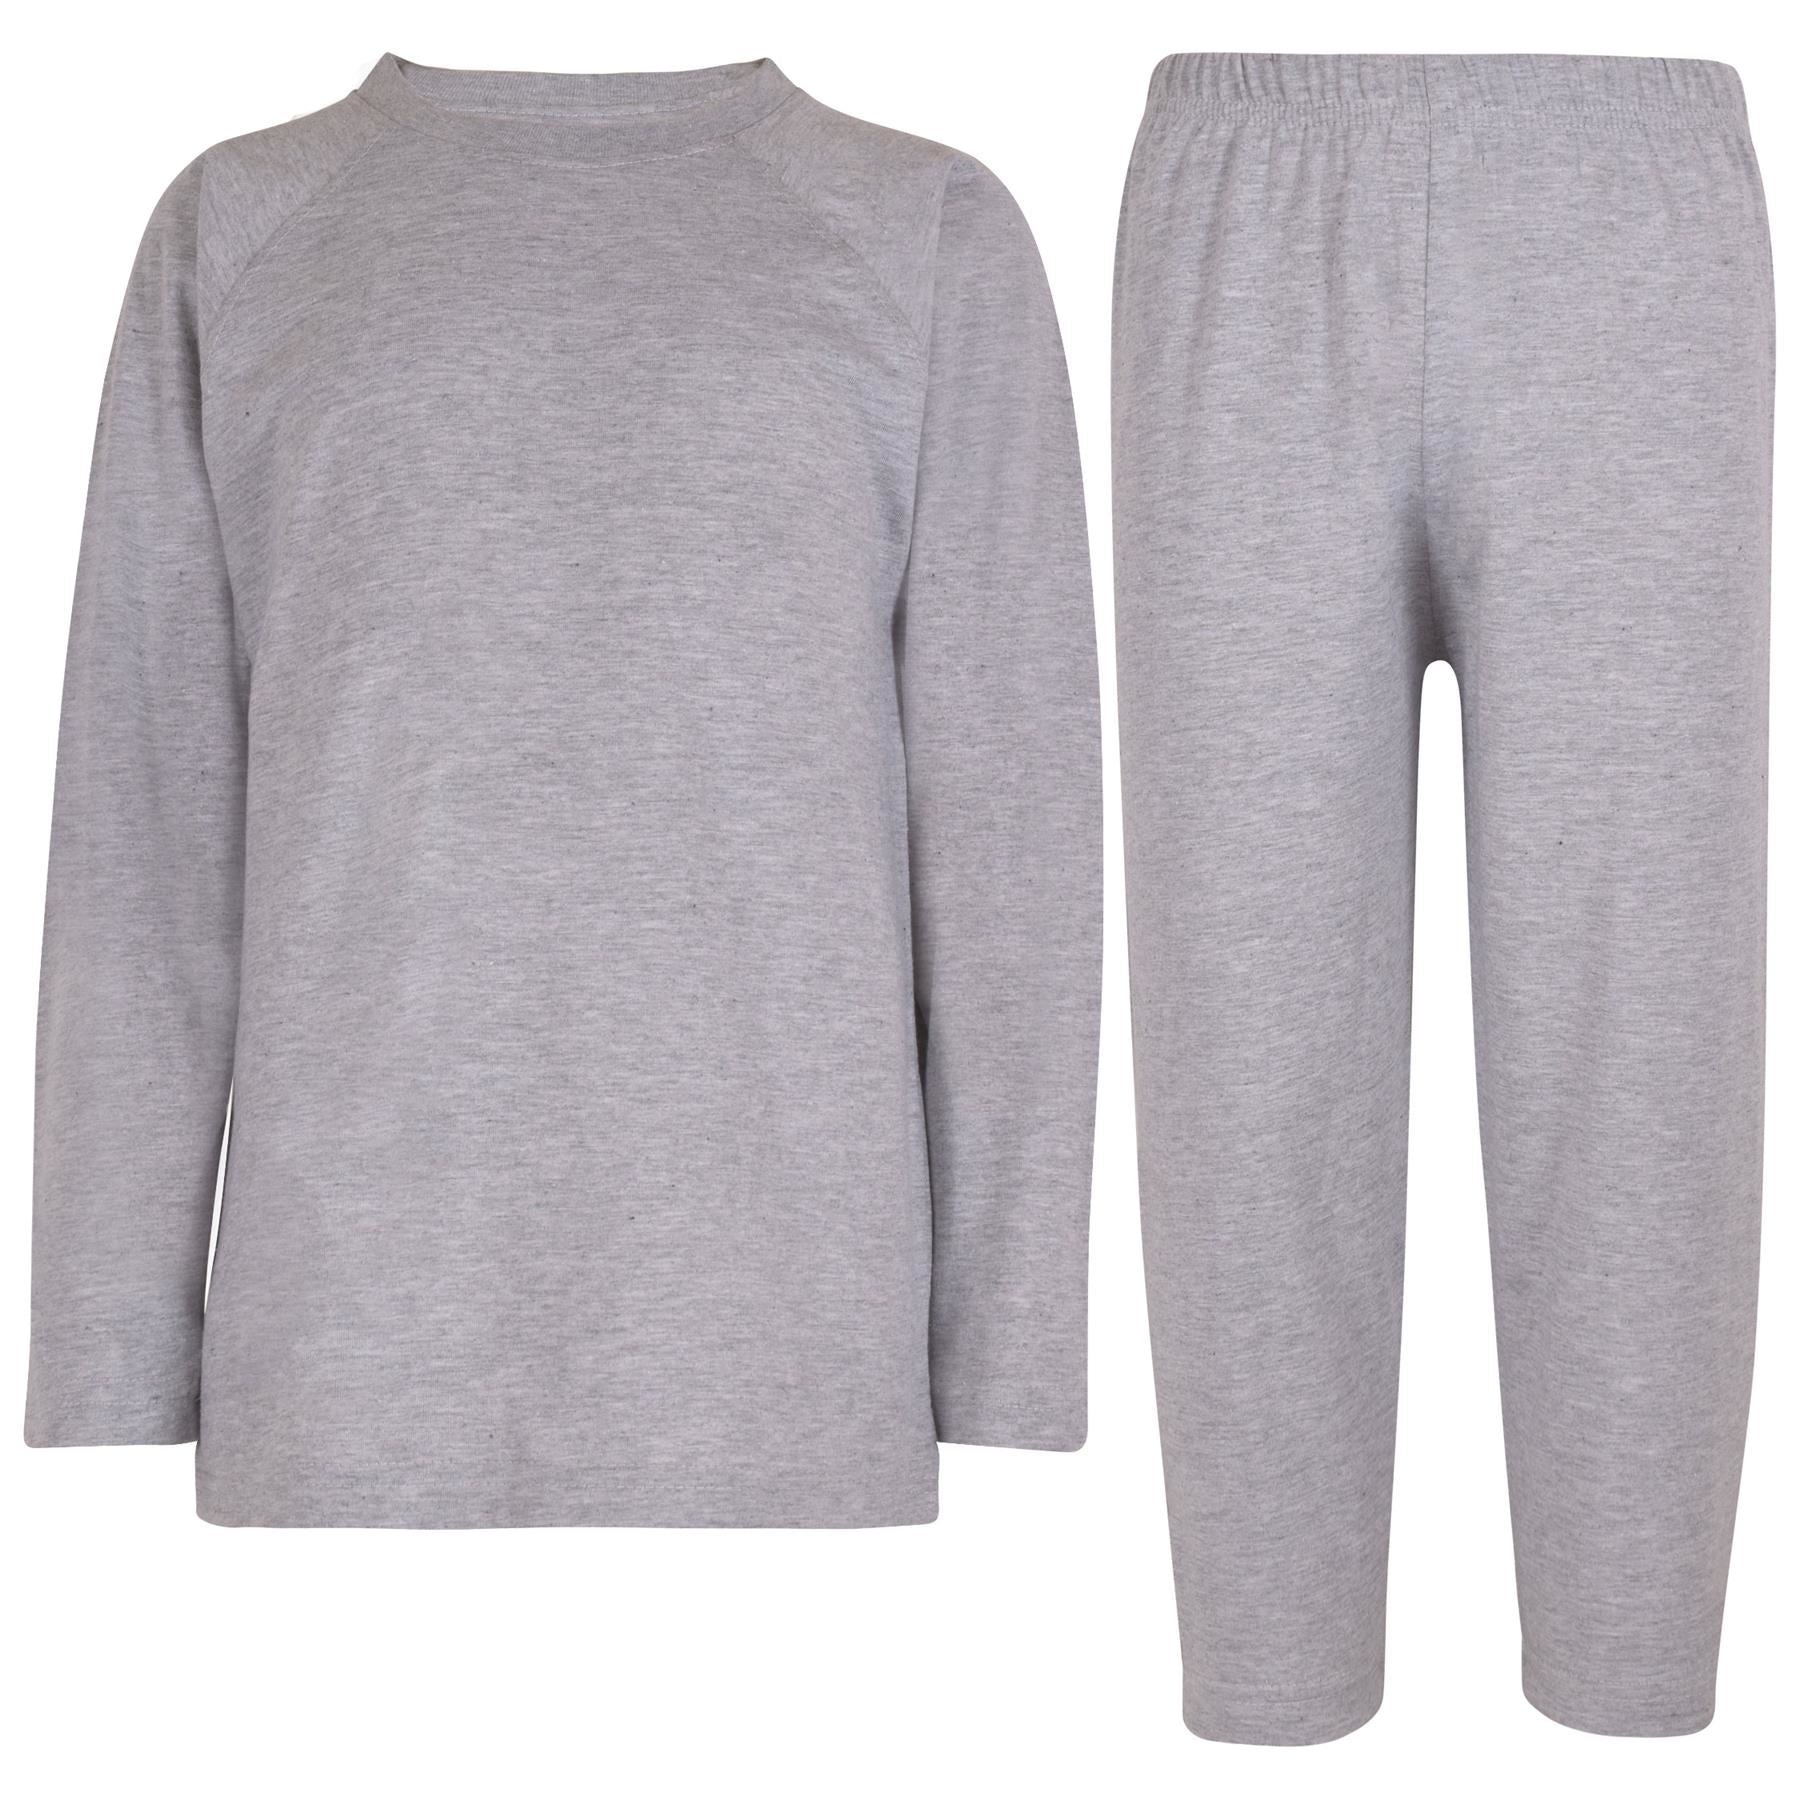 A2Z 4 Kids Girls Boys Raglan Sleeves Plain Pyjamas 2 Piece Comfort Sleepwear Set